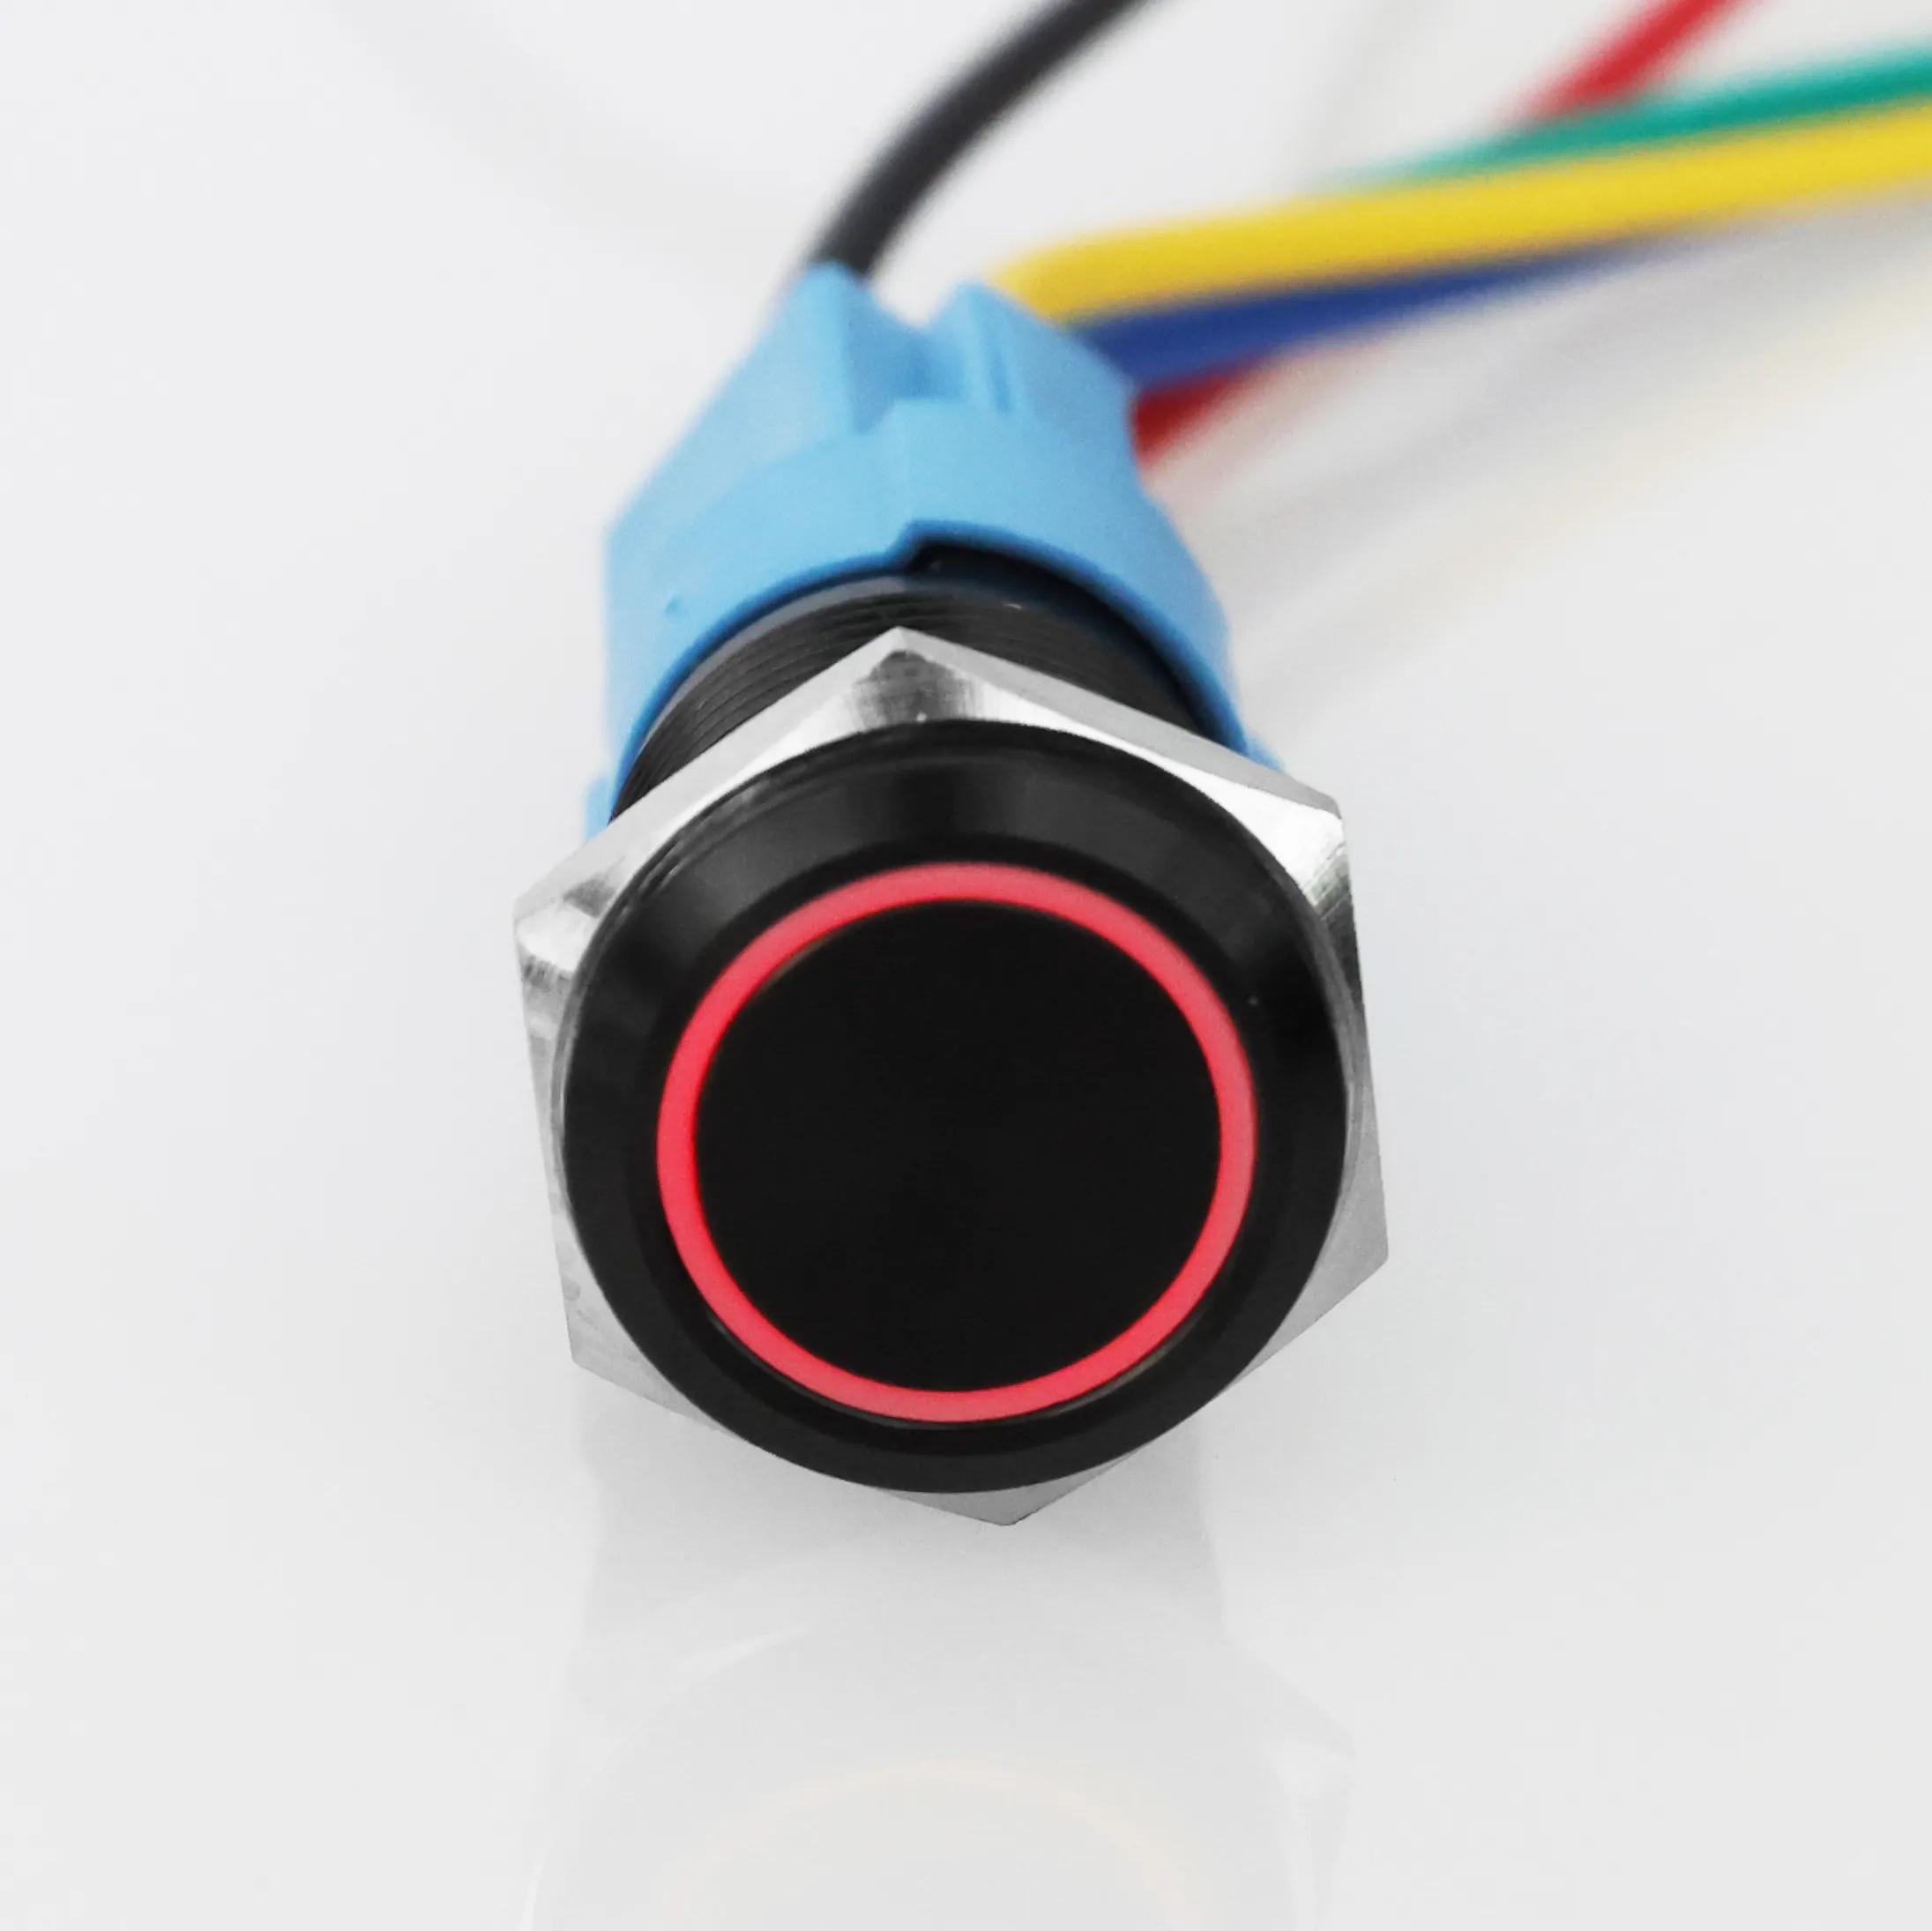 Langir 16mm 3 Amp LED Luz Interruptor de botón a prueba de agua Interruptor de botón de metal negro de enganche instantáneo